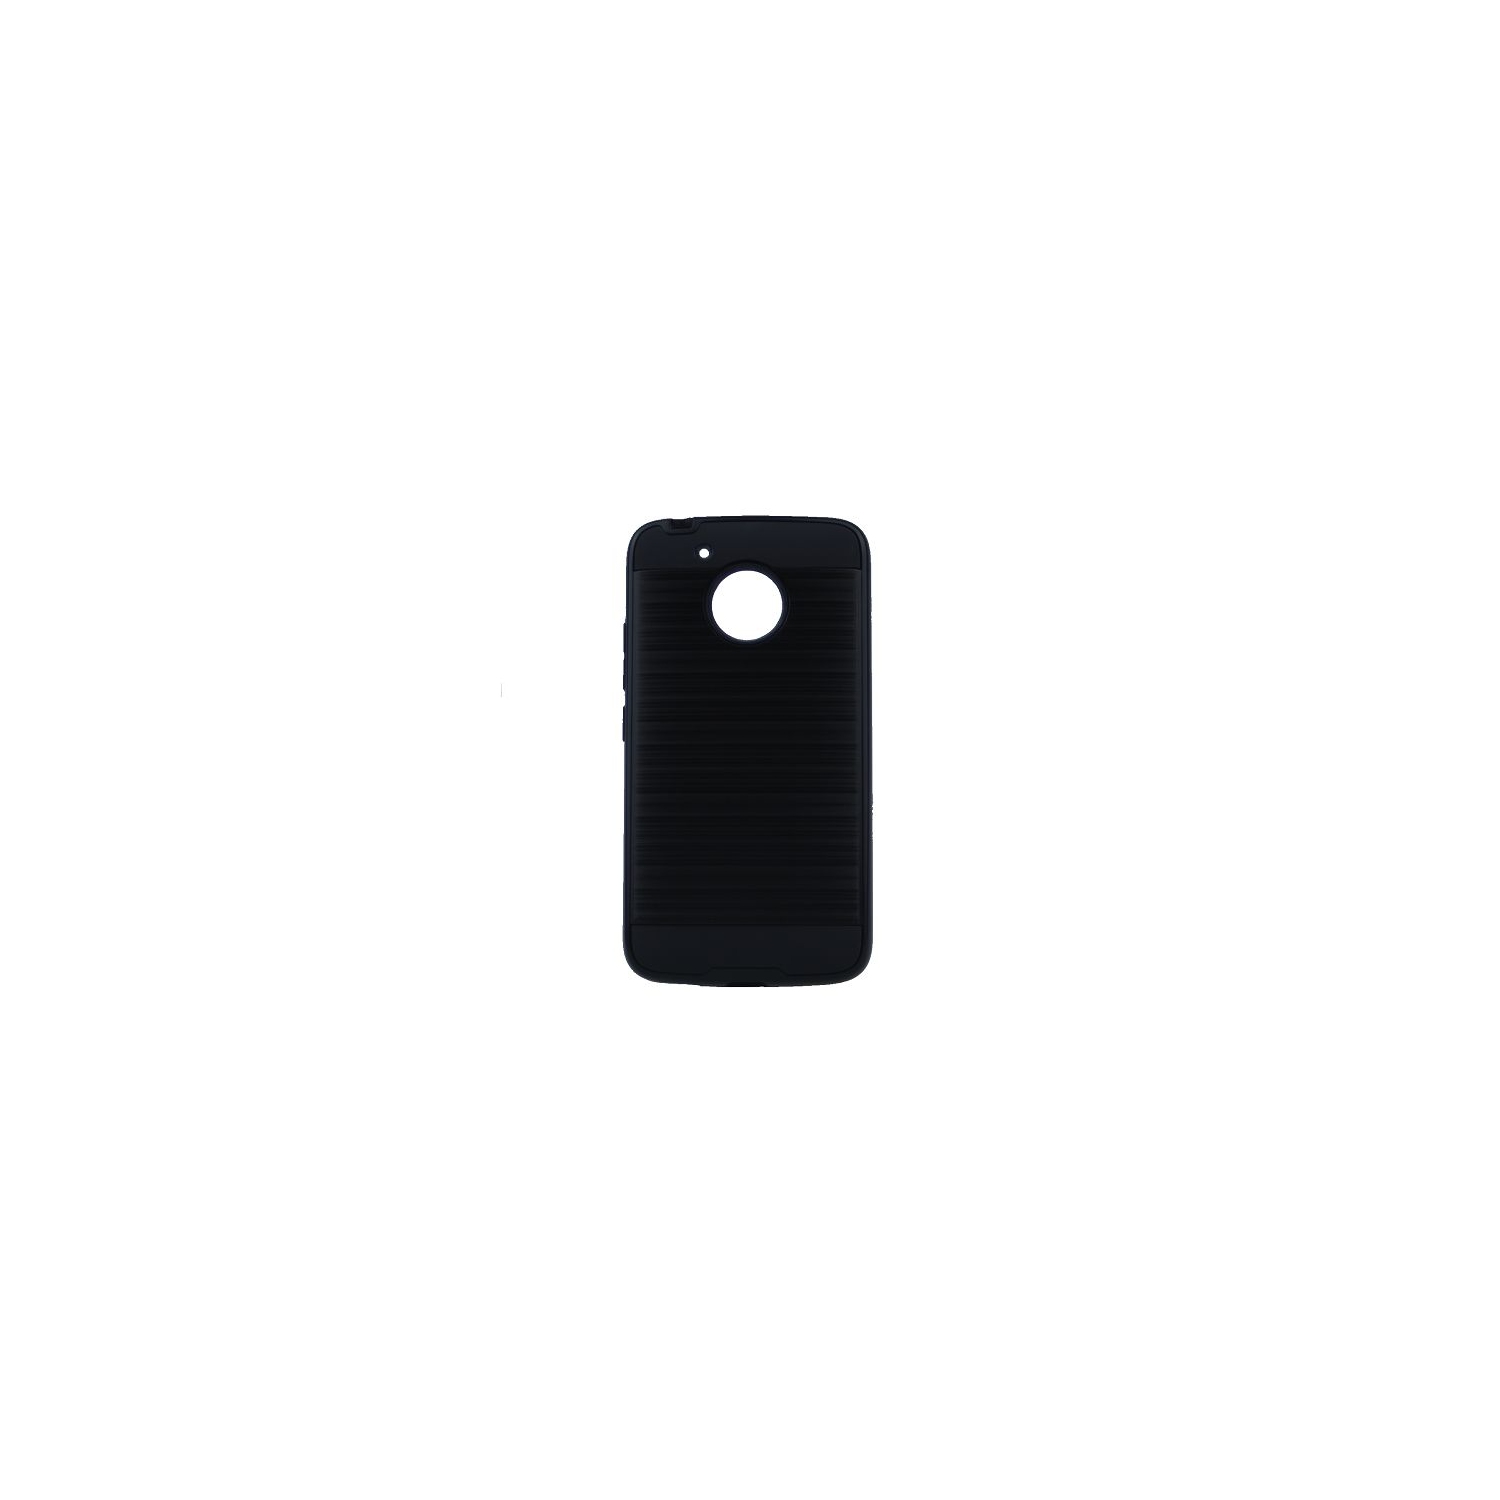 Moto G5 Blush Texture Hard Cover Case, Black